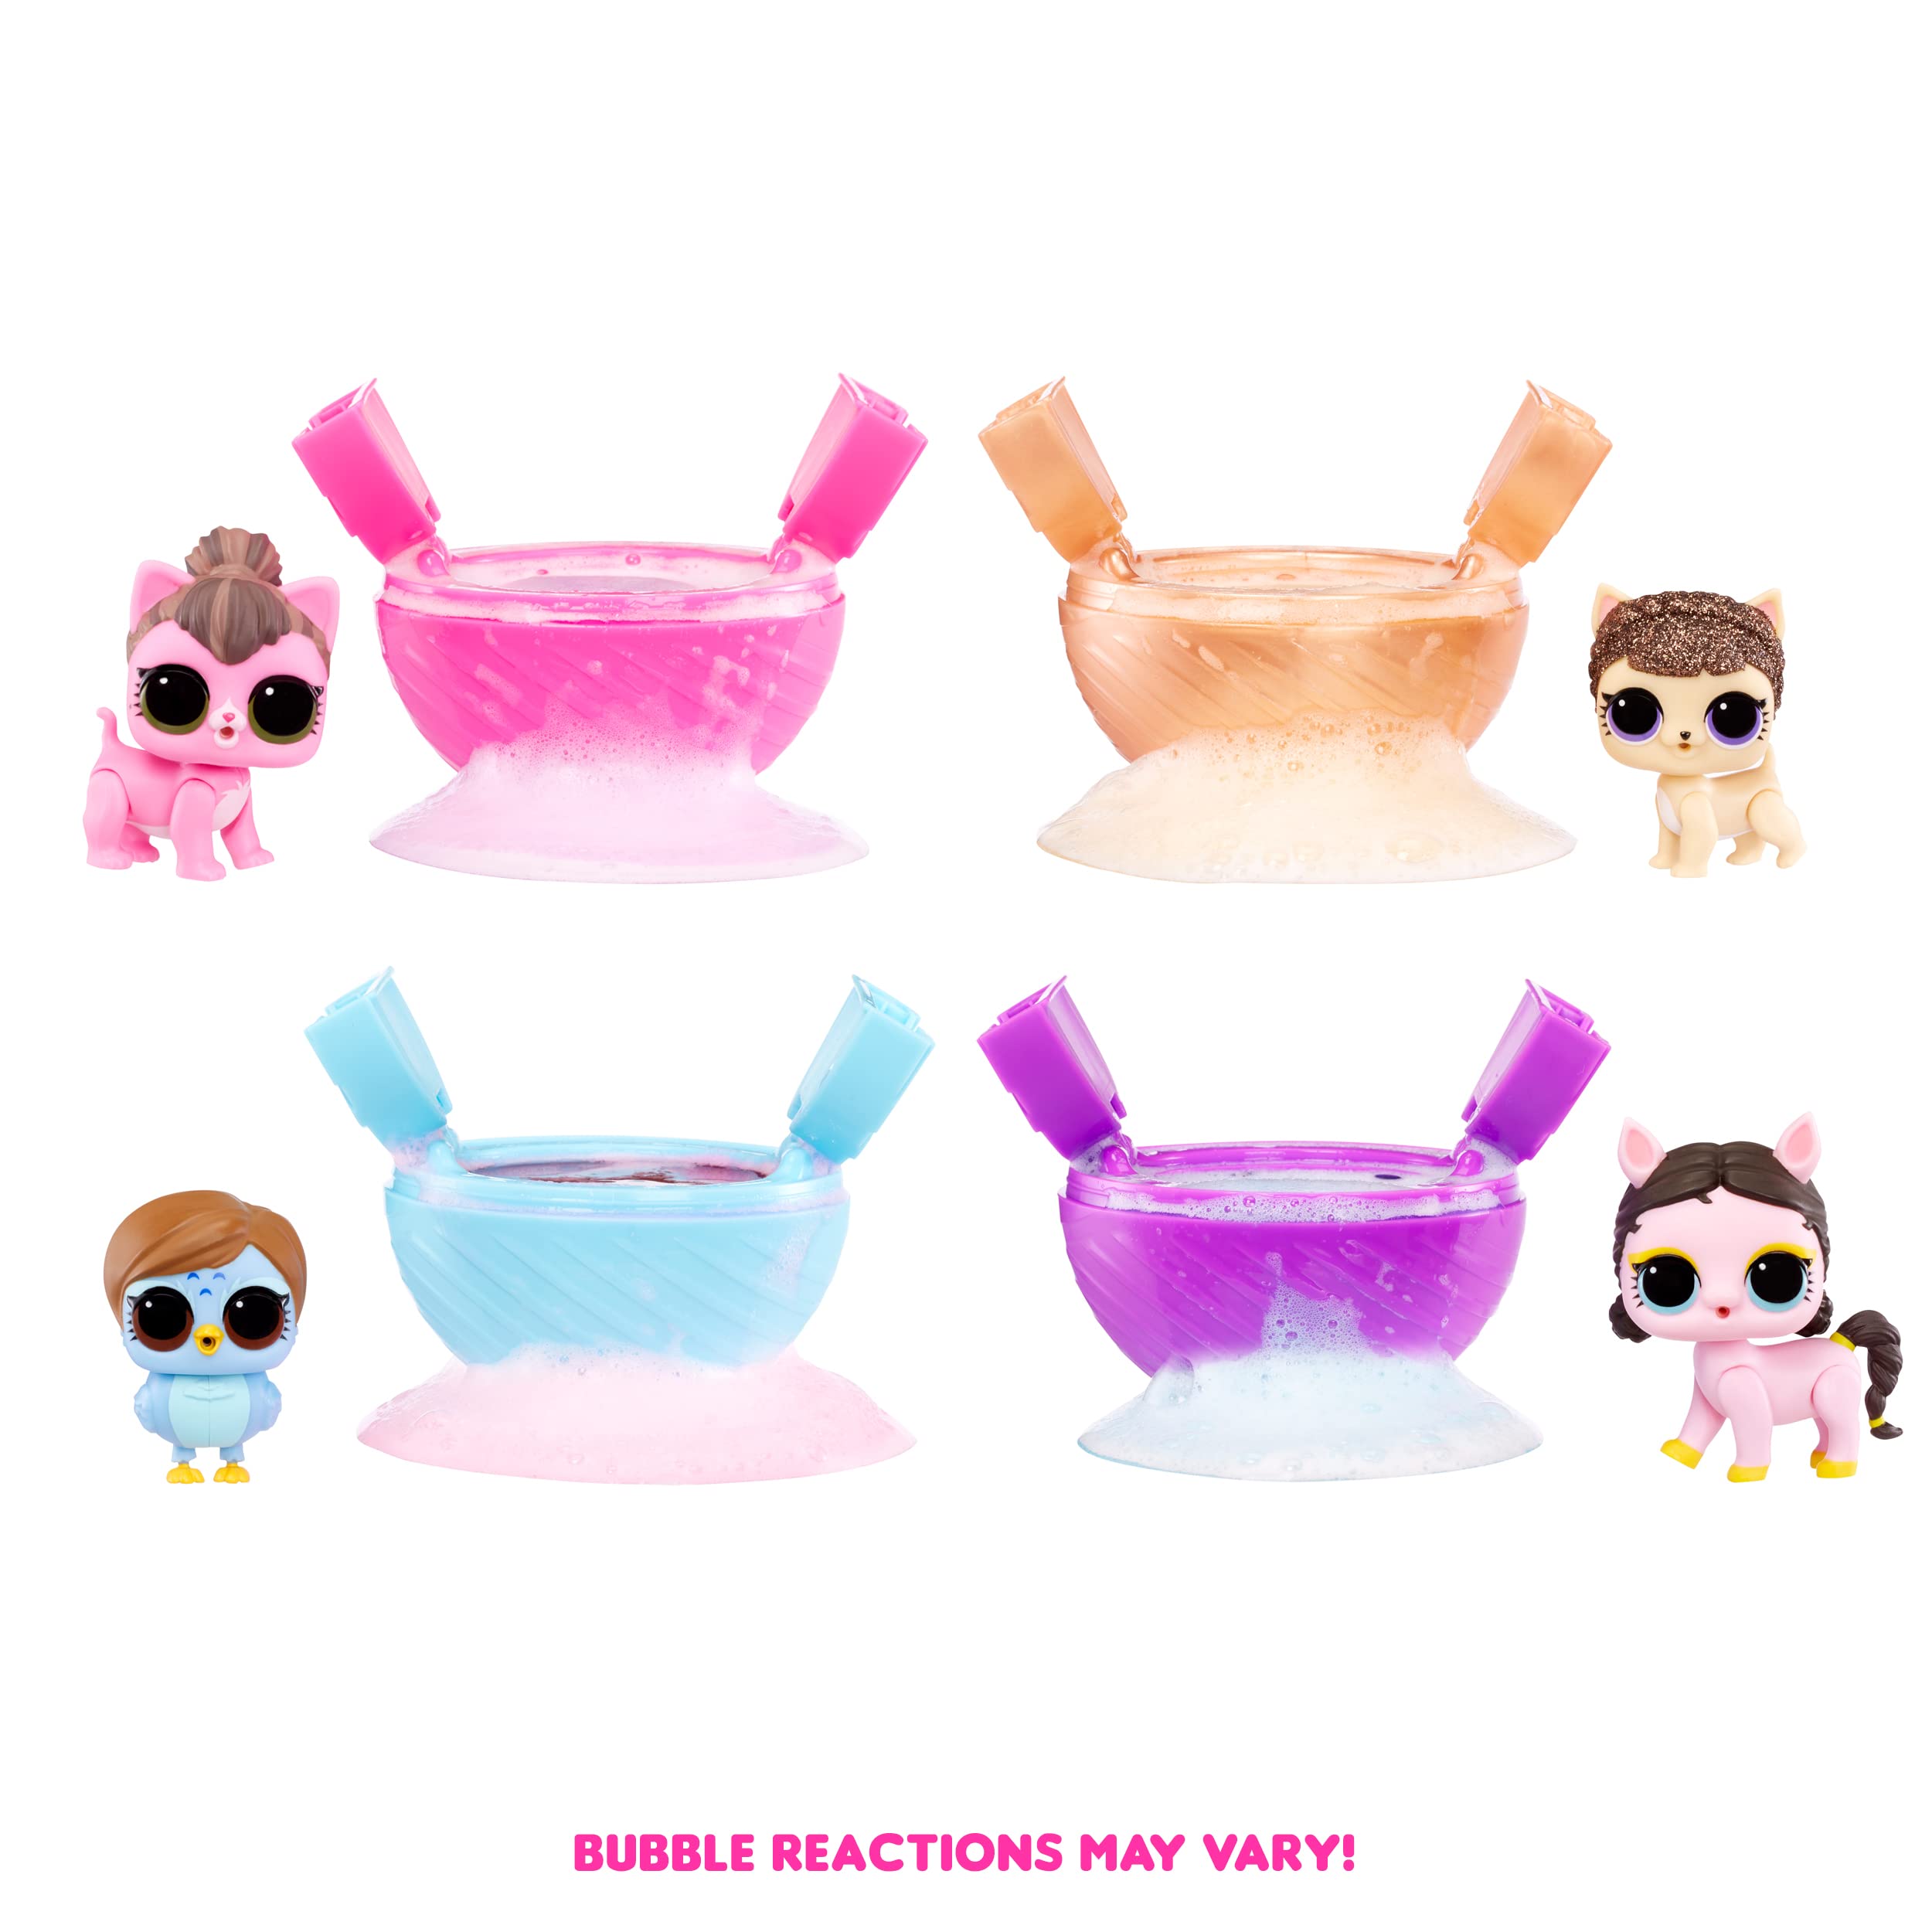 LOL Surprise Bubble Surprise Pets - Collectible Doll, Pet, Surprises, Accessories, Bubble Surprise Unboxing, Bubble Foam Reaction - Great Gift for Girls Age 4+